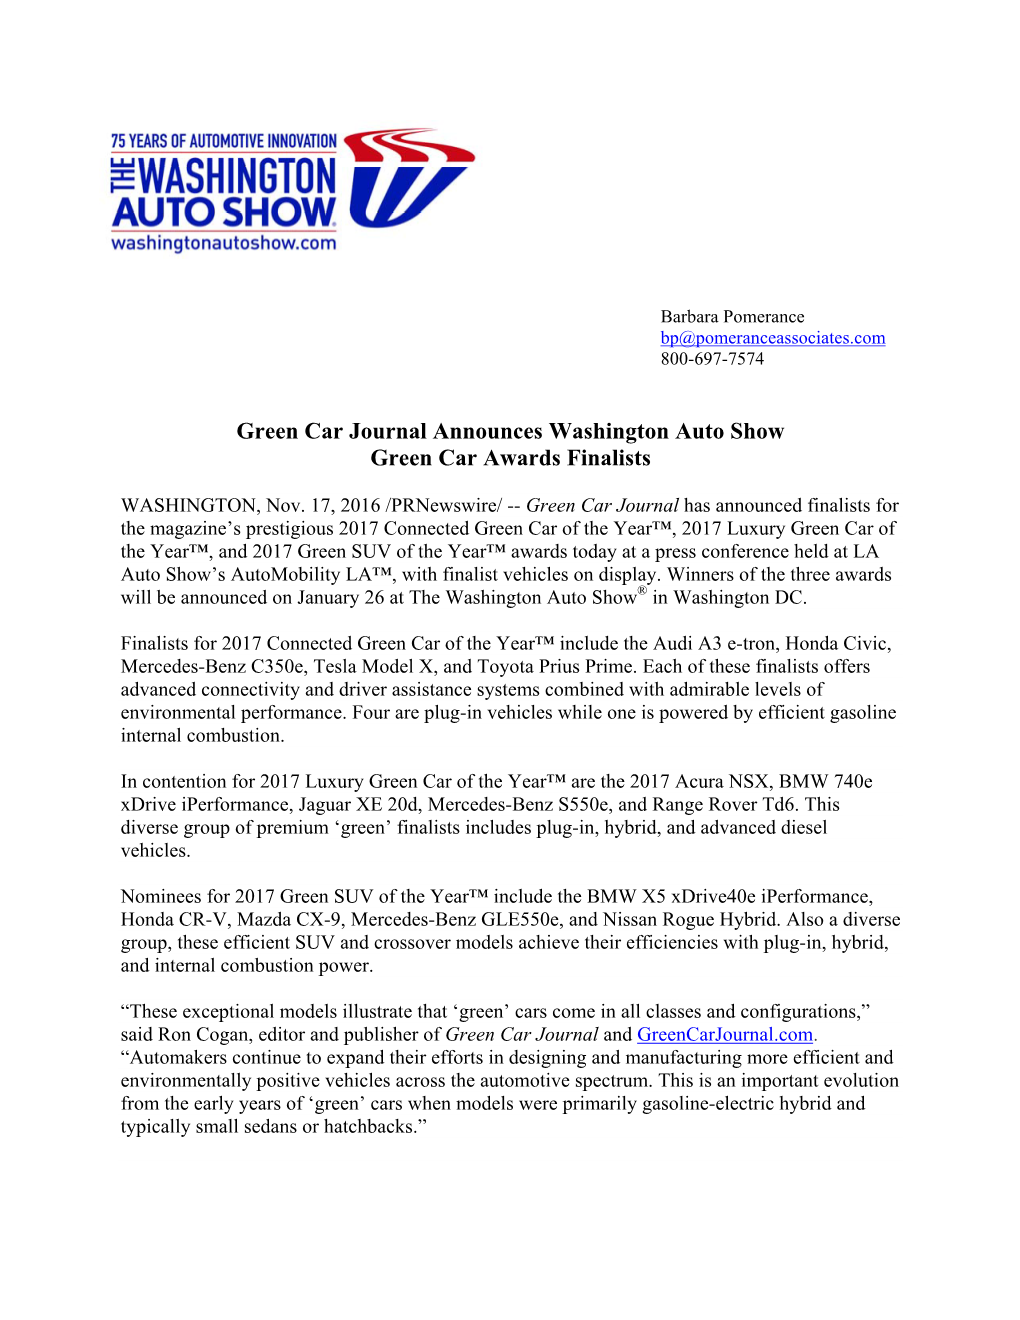 Green Car Journal Announces Washington Auto Show Green Car Awards Finalists